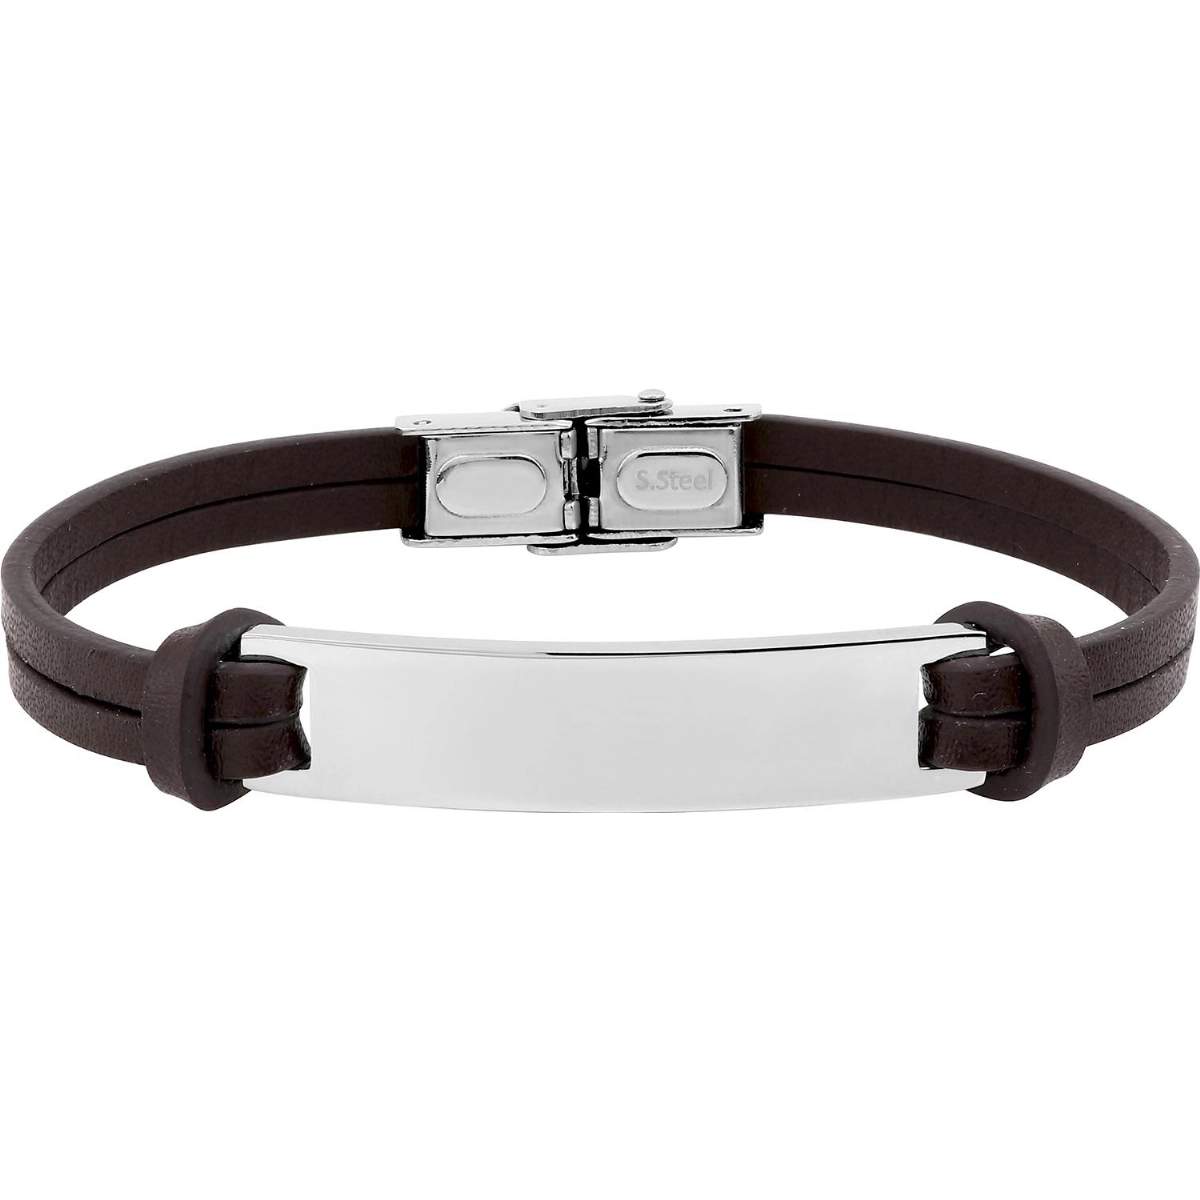 Bracelet leather brown st.Steel Lua Blanca  526743